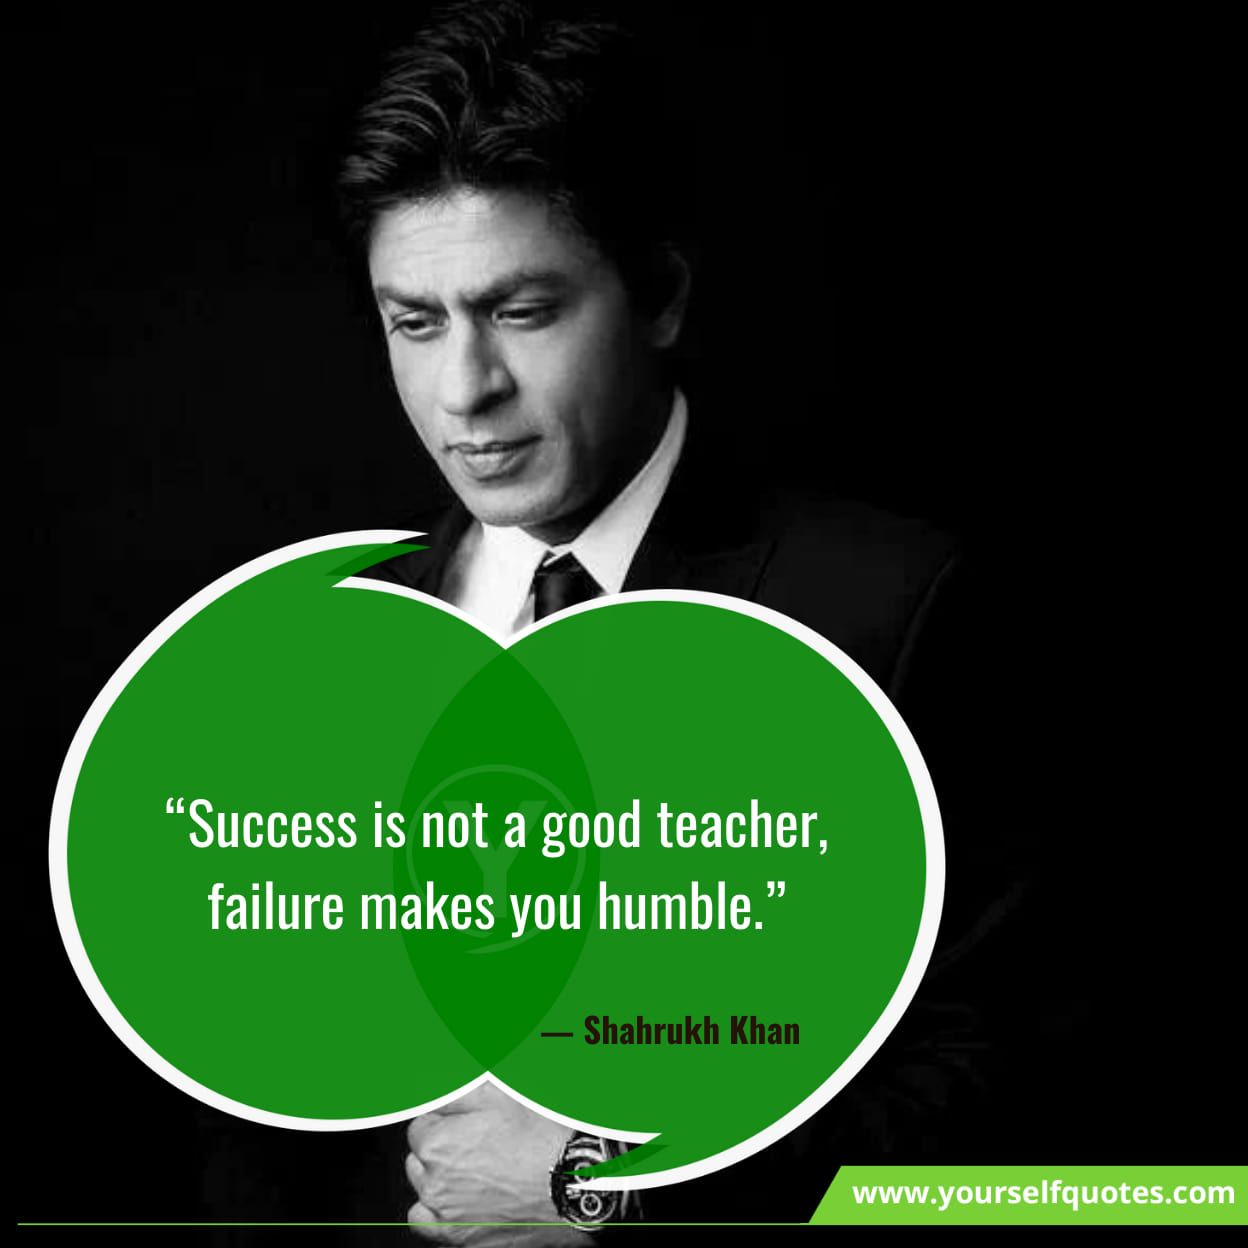 Shahrukh Khan Quotes On Success